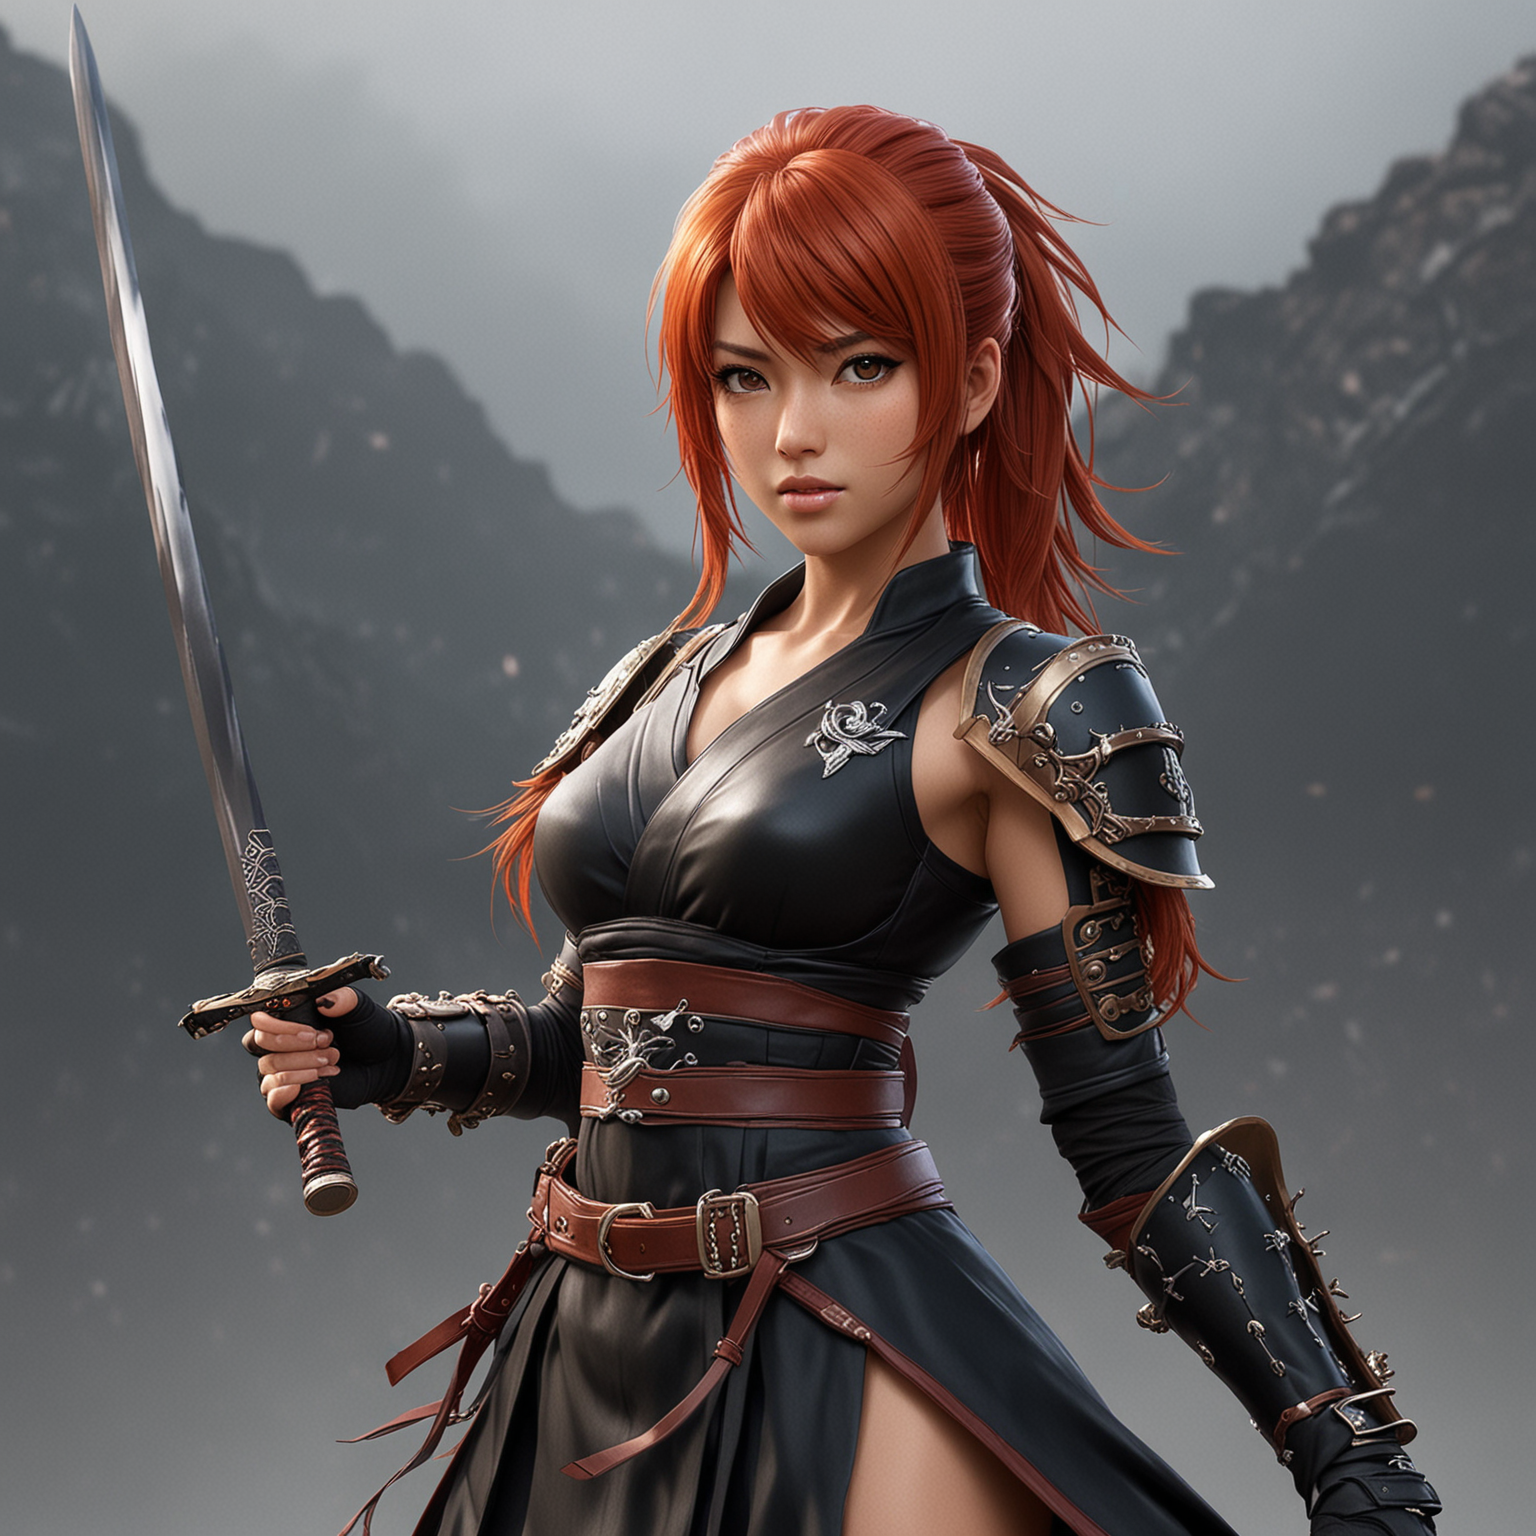 RedHaired Female Warrior with Katana HyperRealistic Anime Character Yoko Nakajima